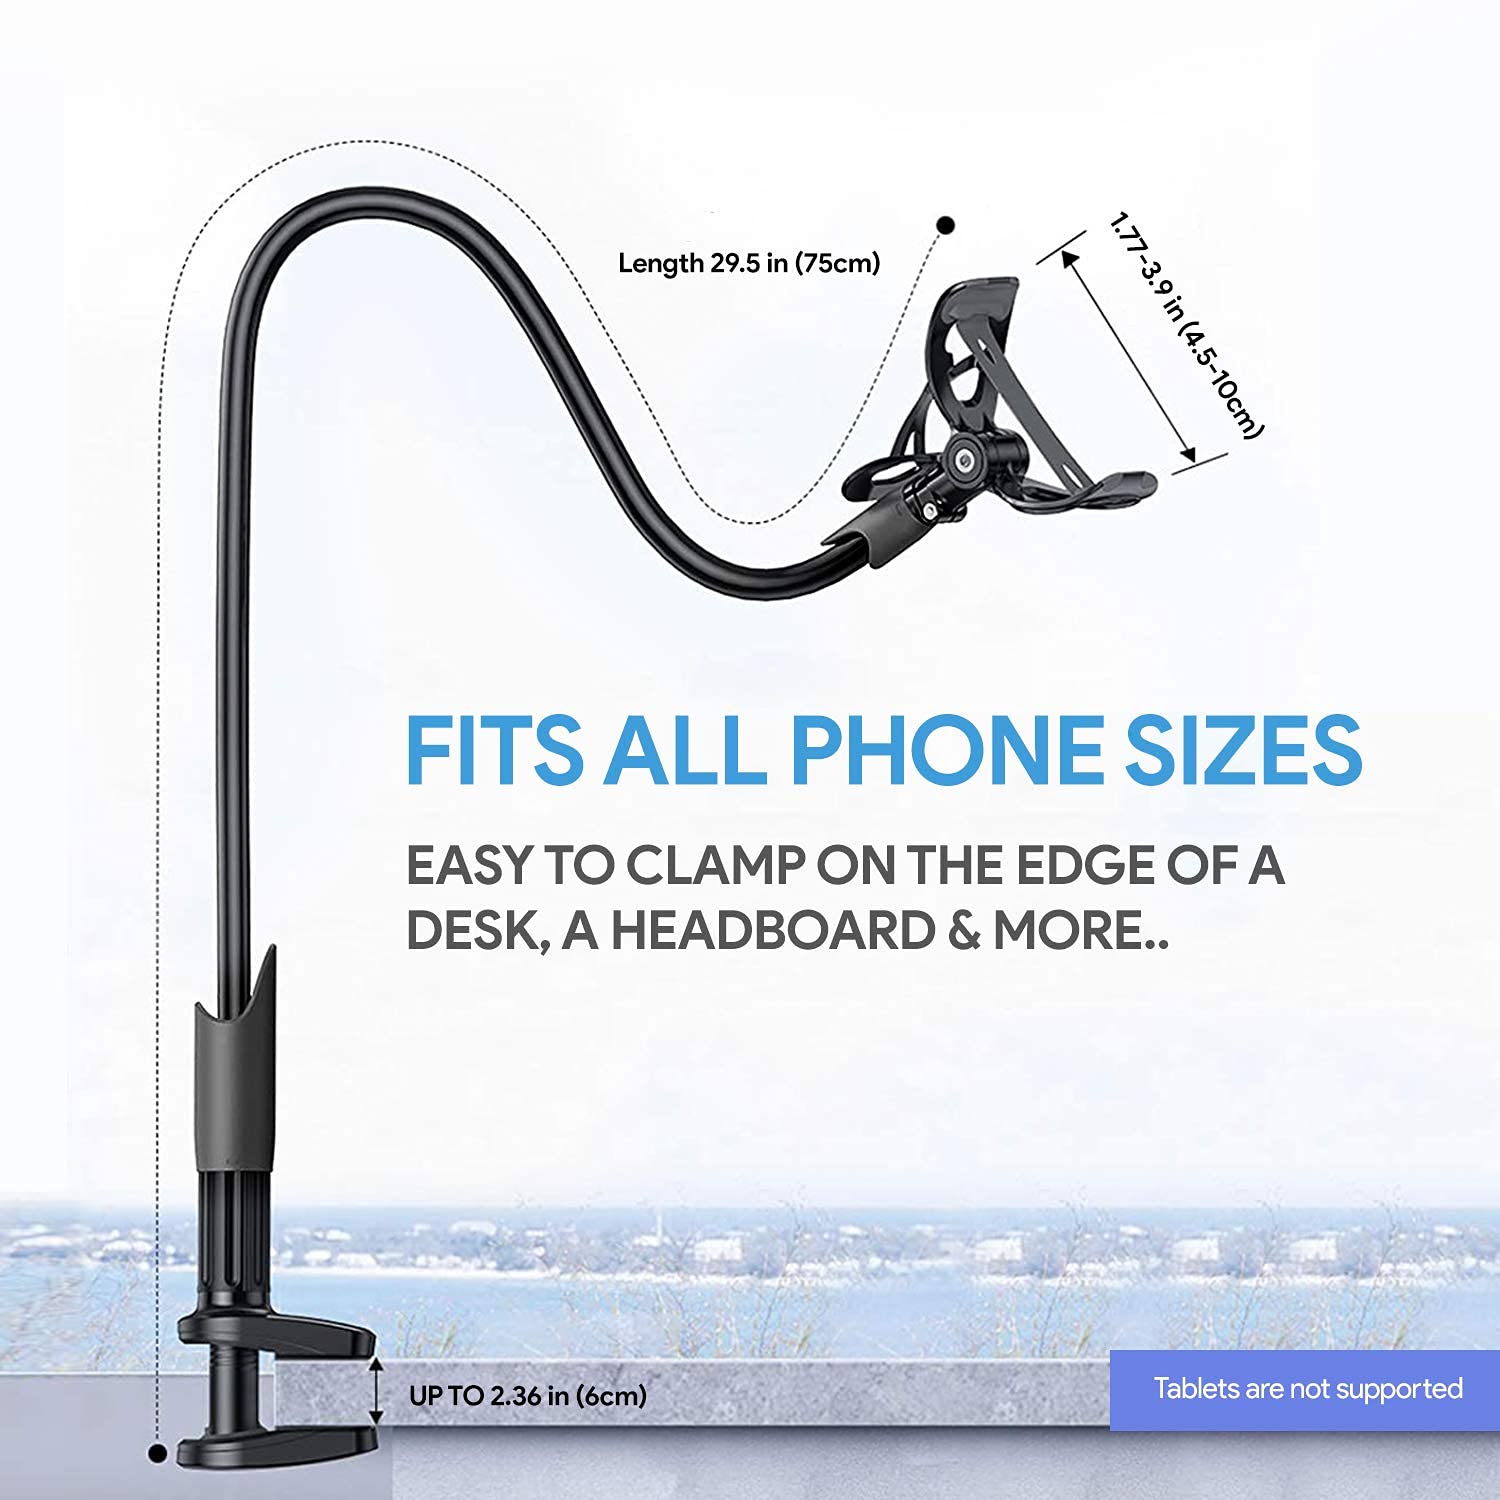 iGrip Bike Phone Mount – Amkette